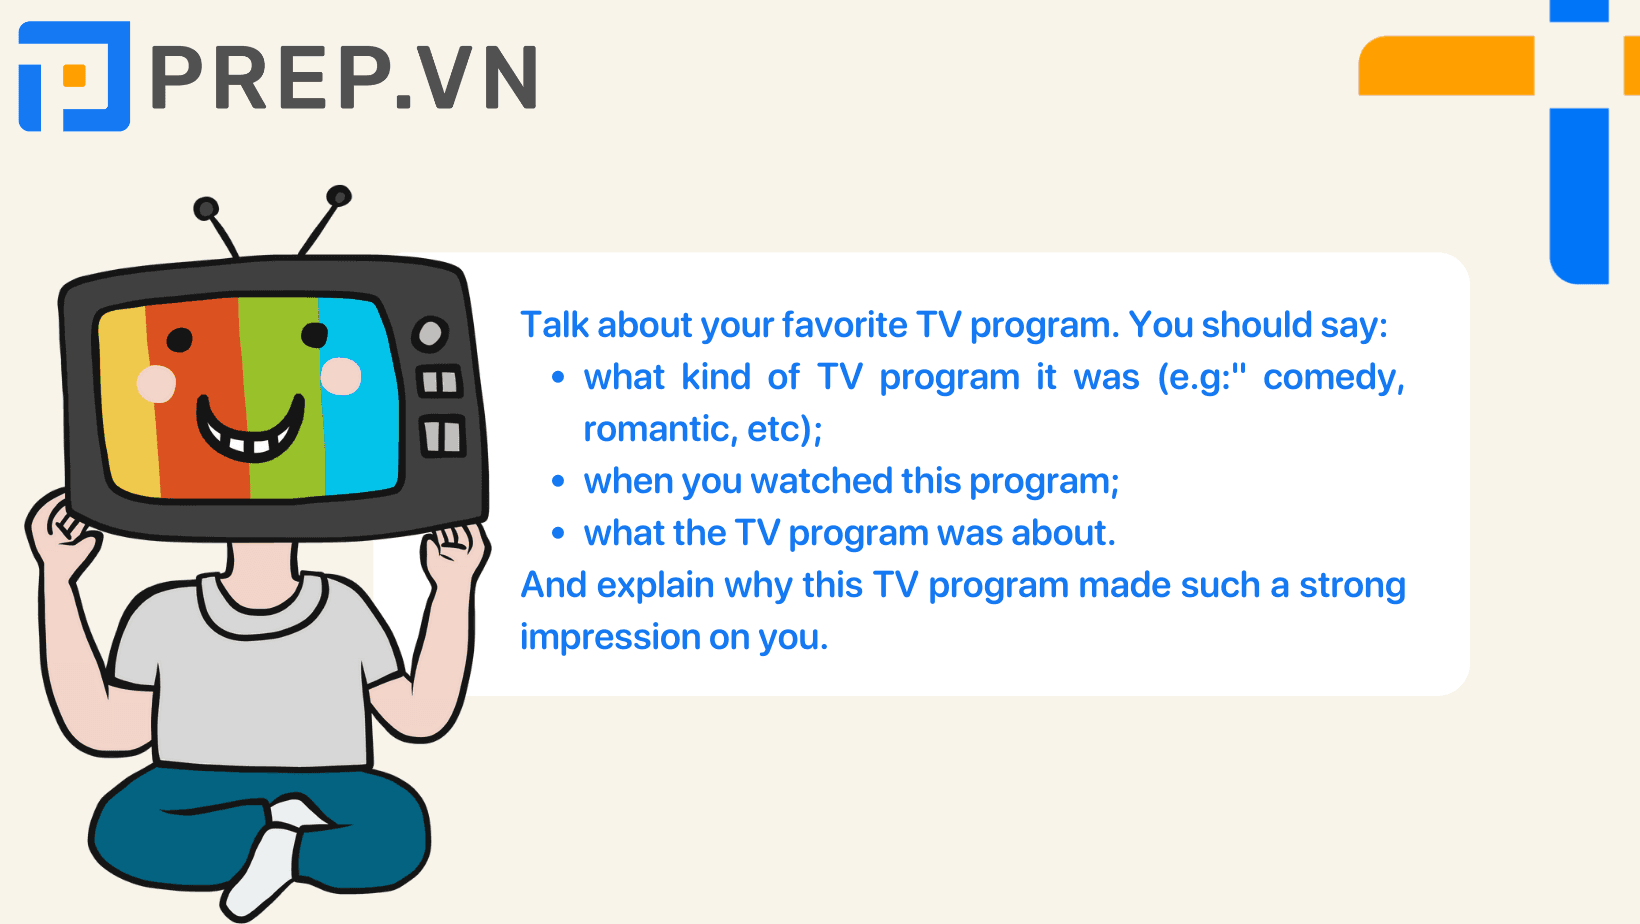 Talk about your favorite TV program